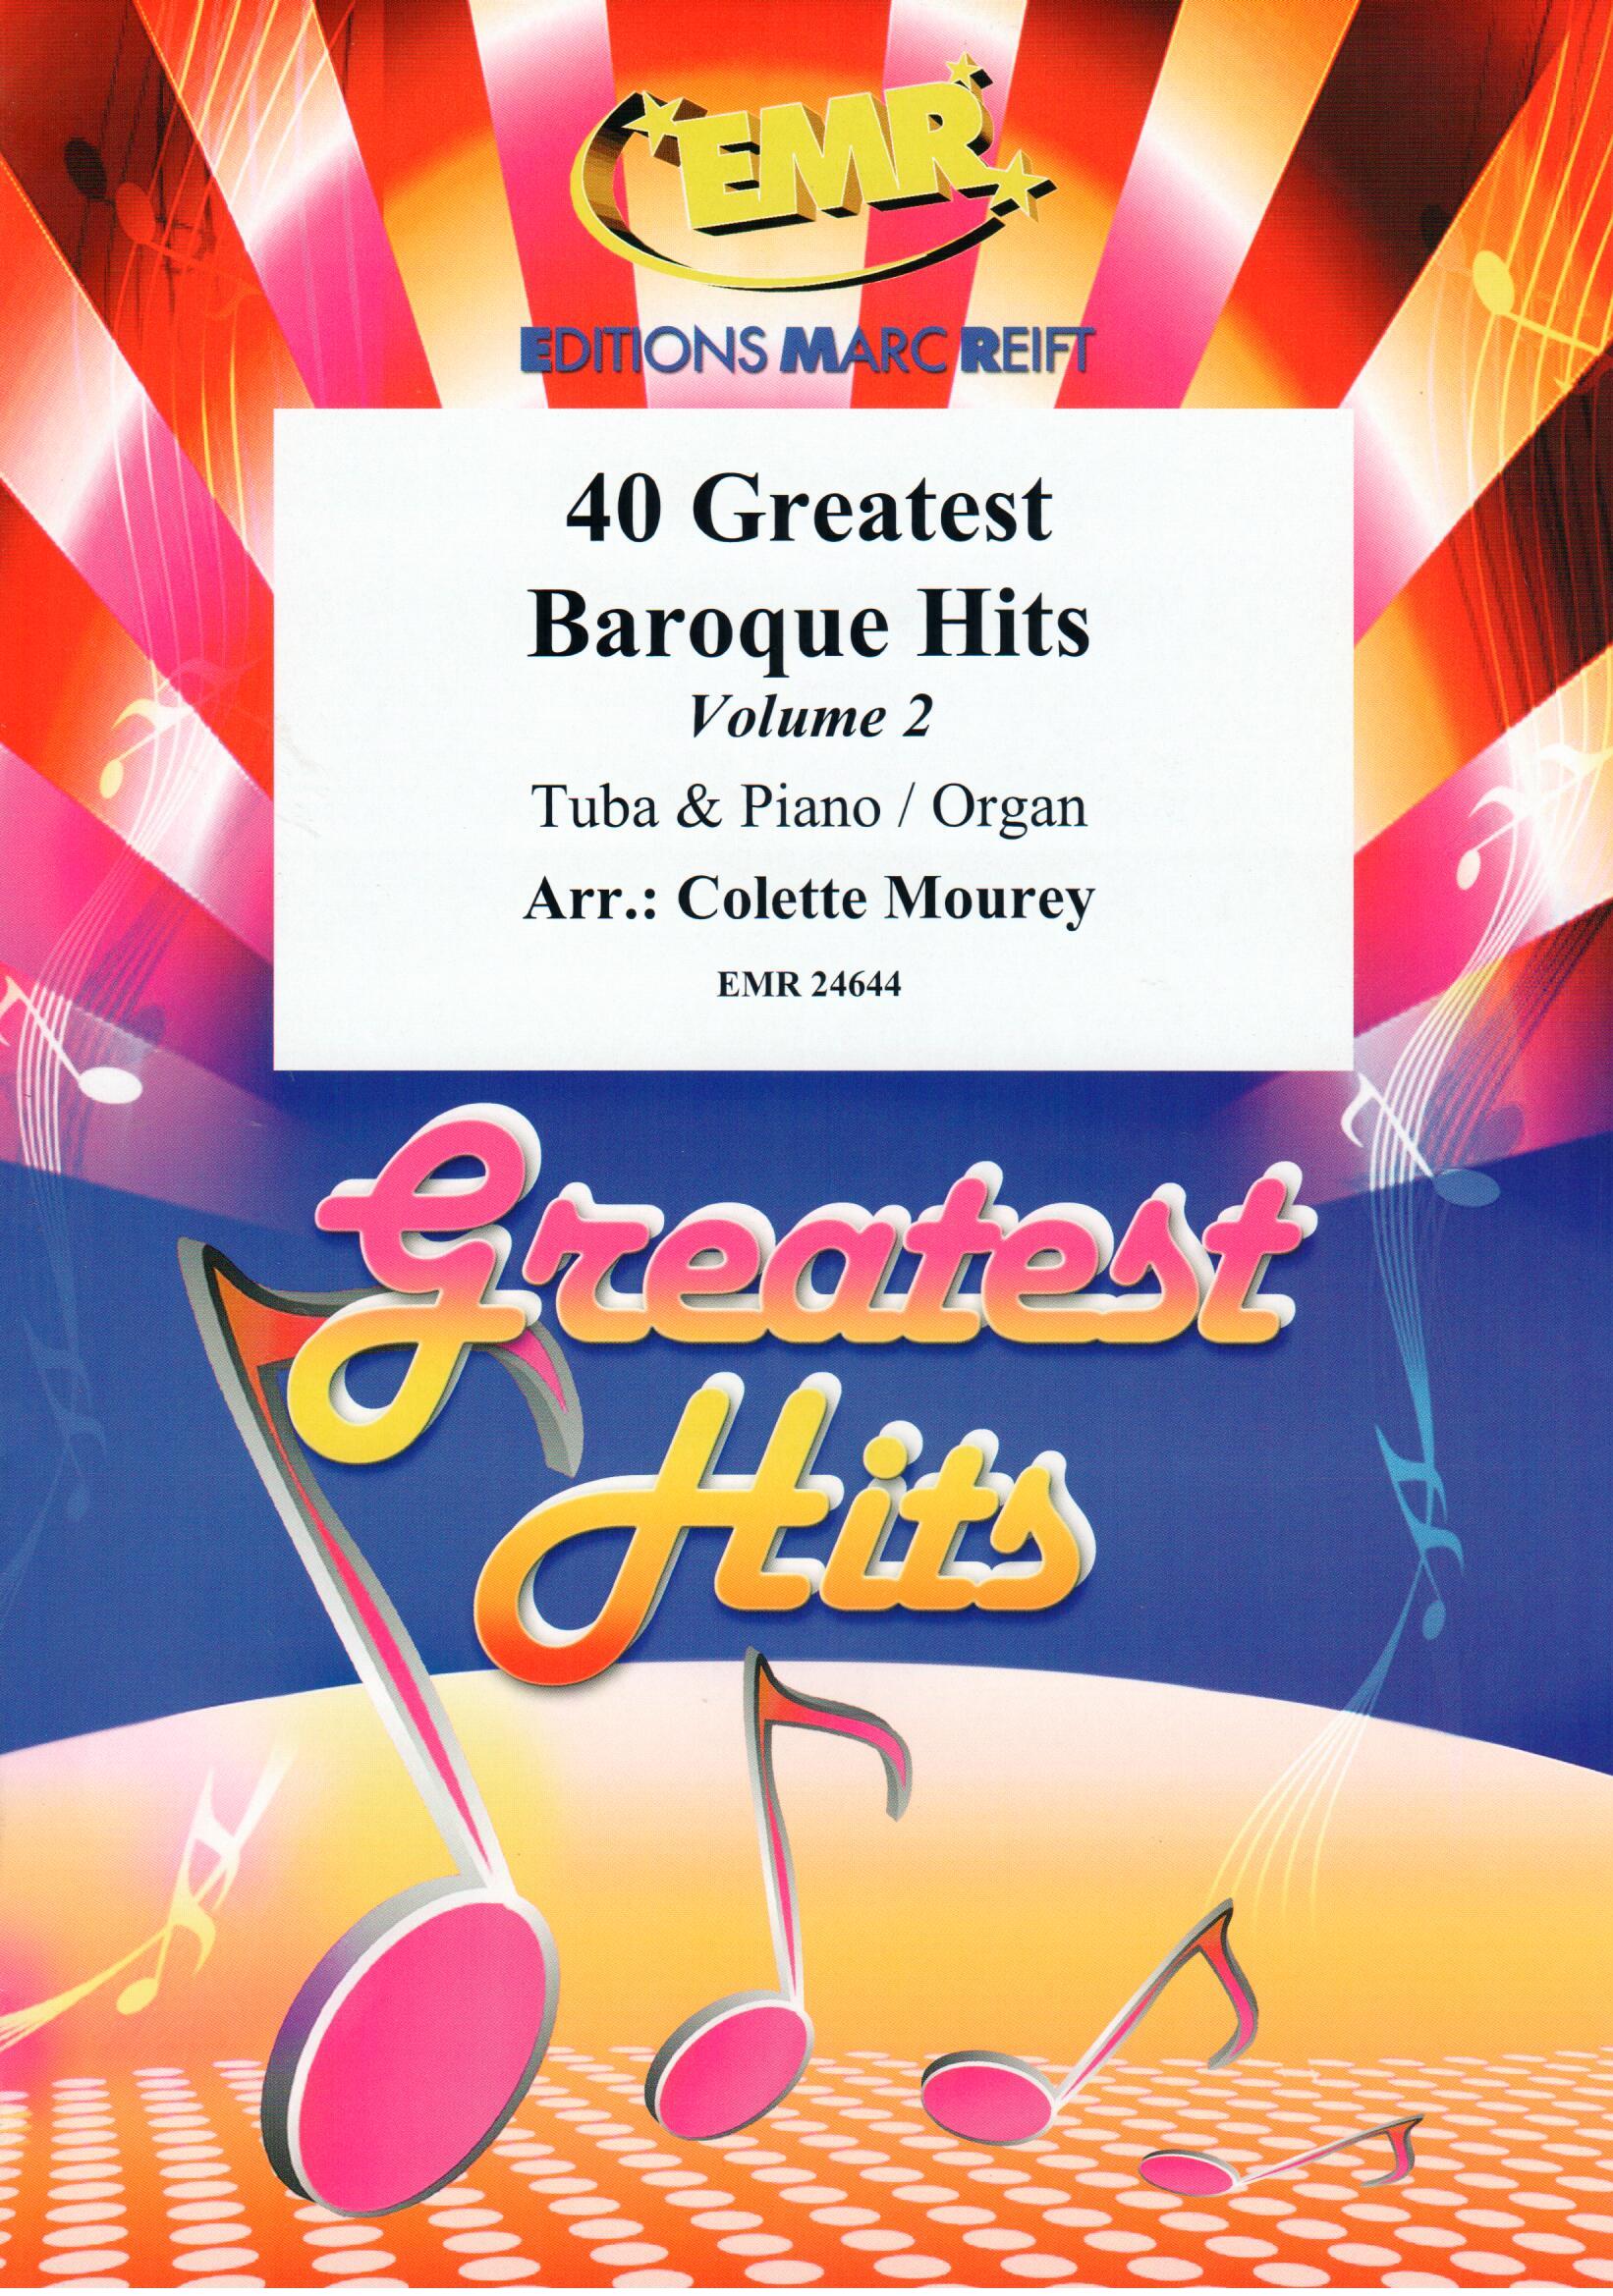 40 GREATEST BAROQUE HITS VOLUME 2, SOLOS - E♭. Bass